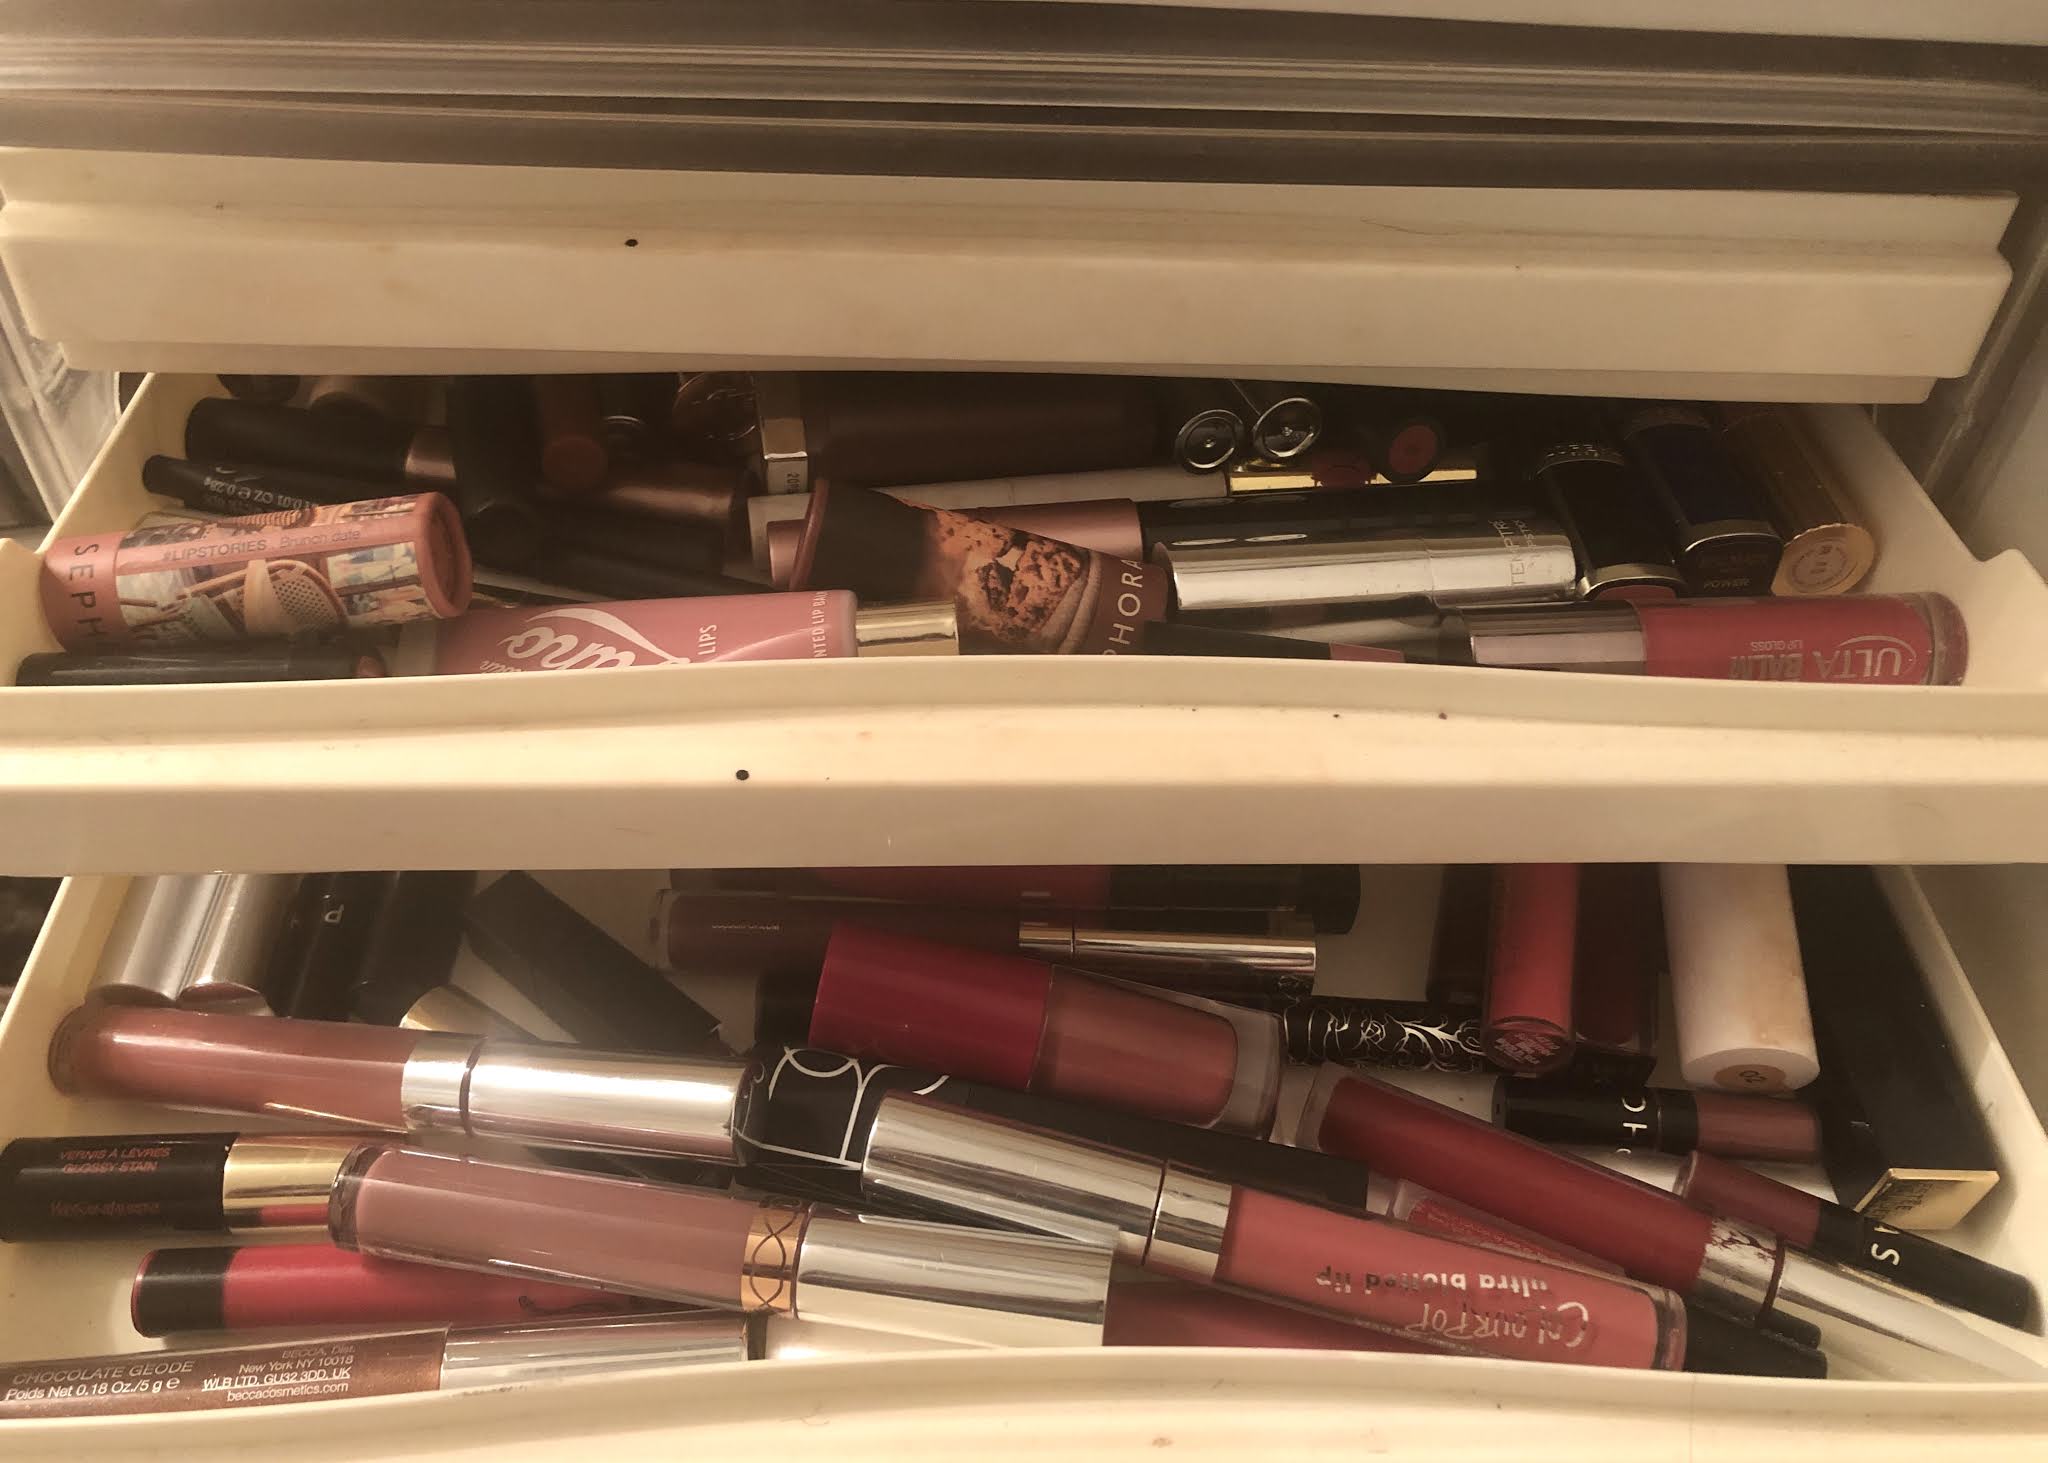 National Lipstick Day | bellanoirbeauty.com